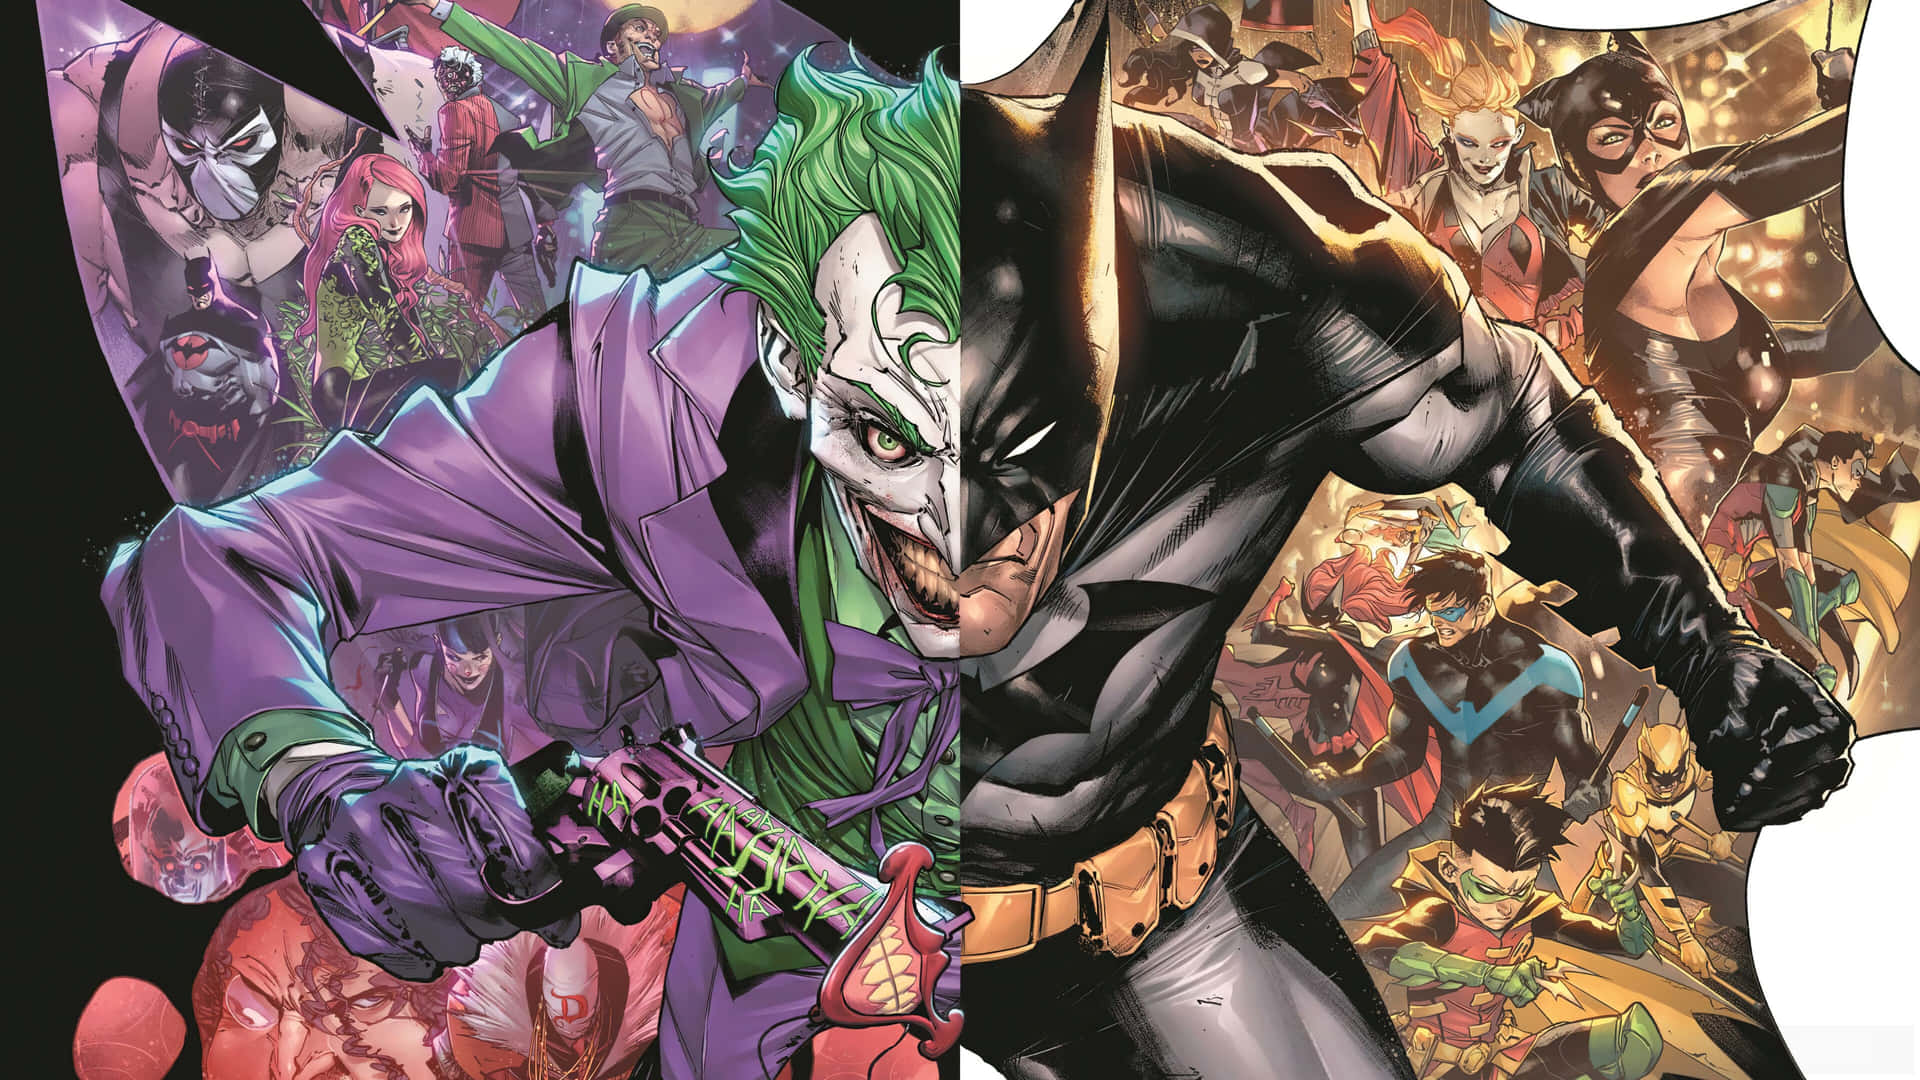 Cool Joker Cover With Batman